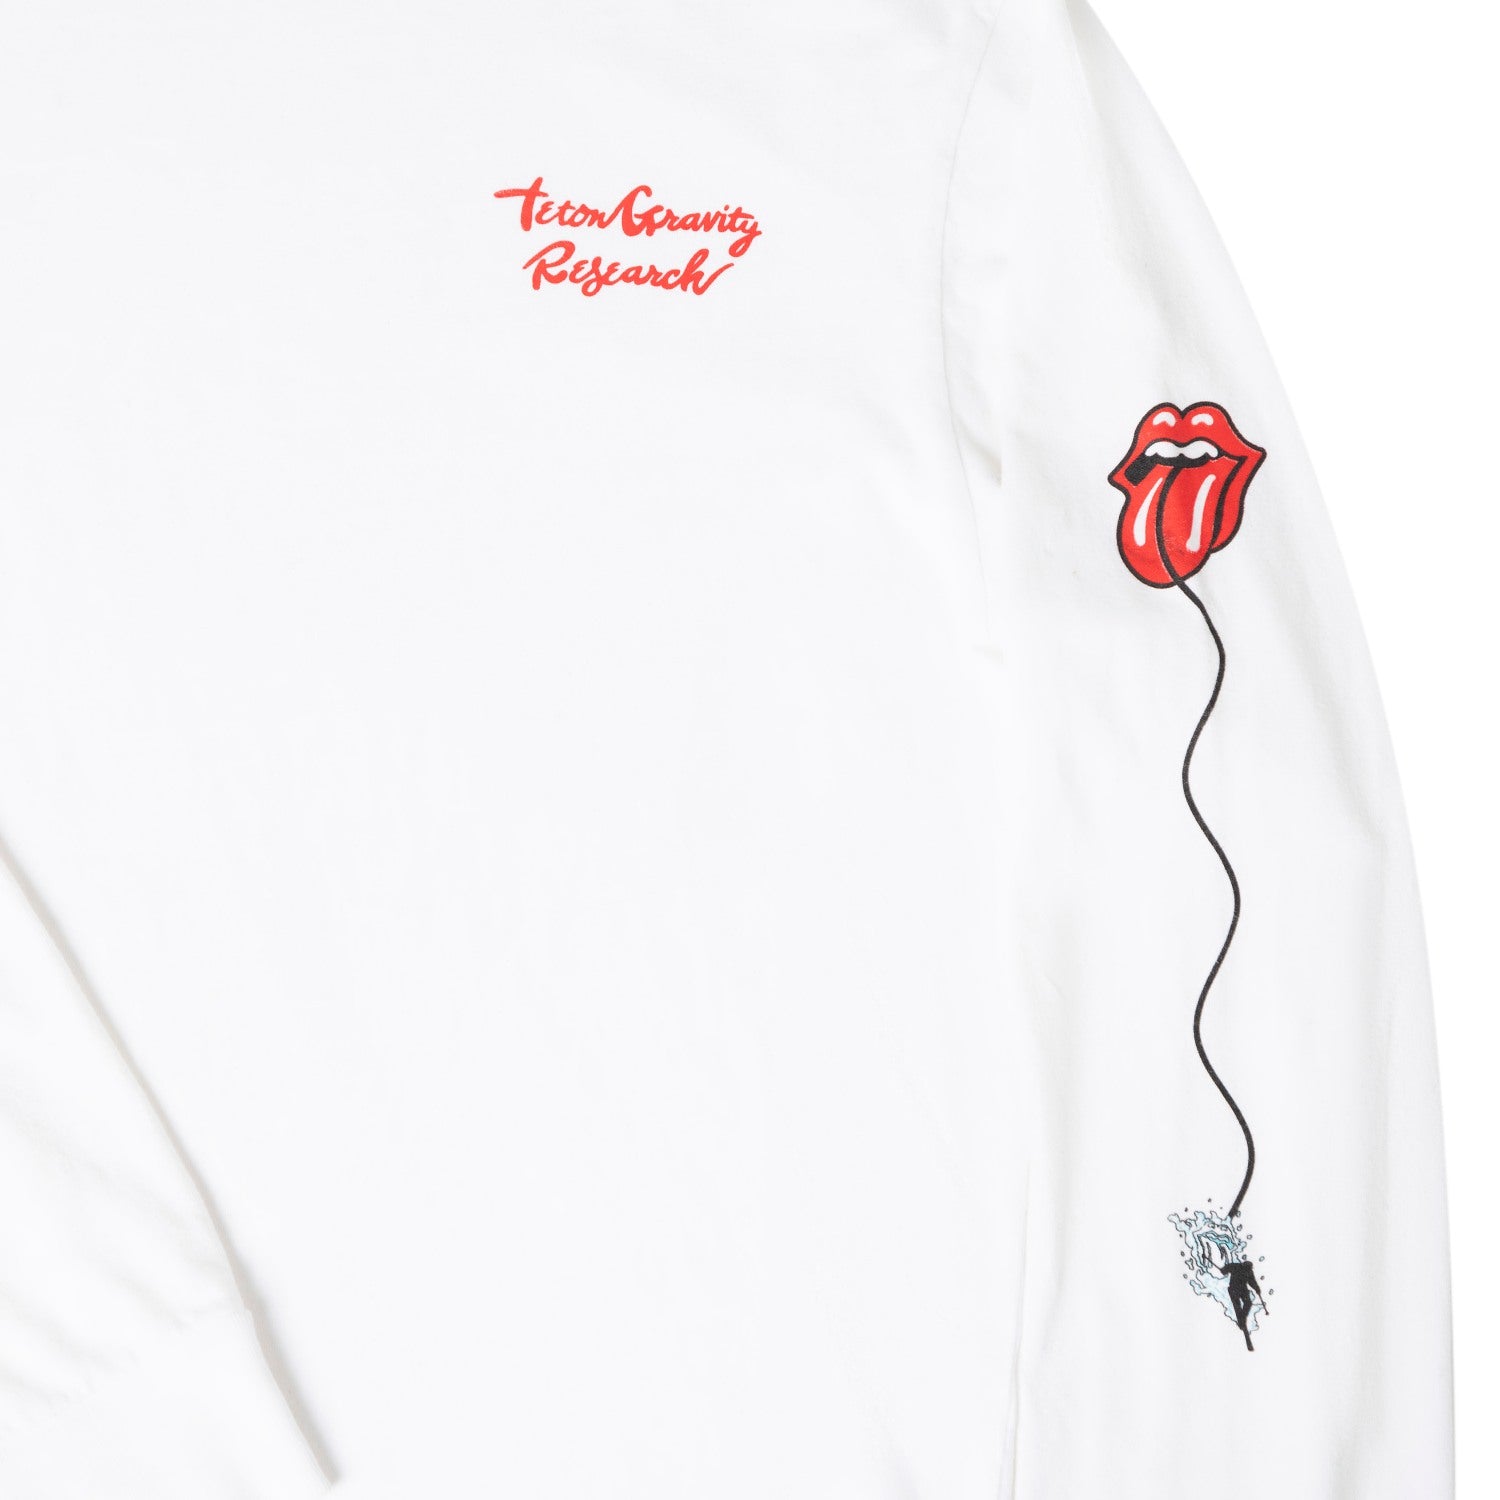 Rolling Stones x TGR 